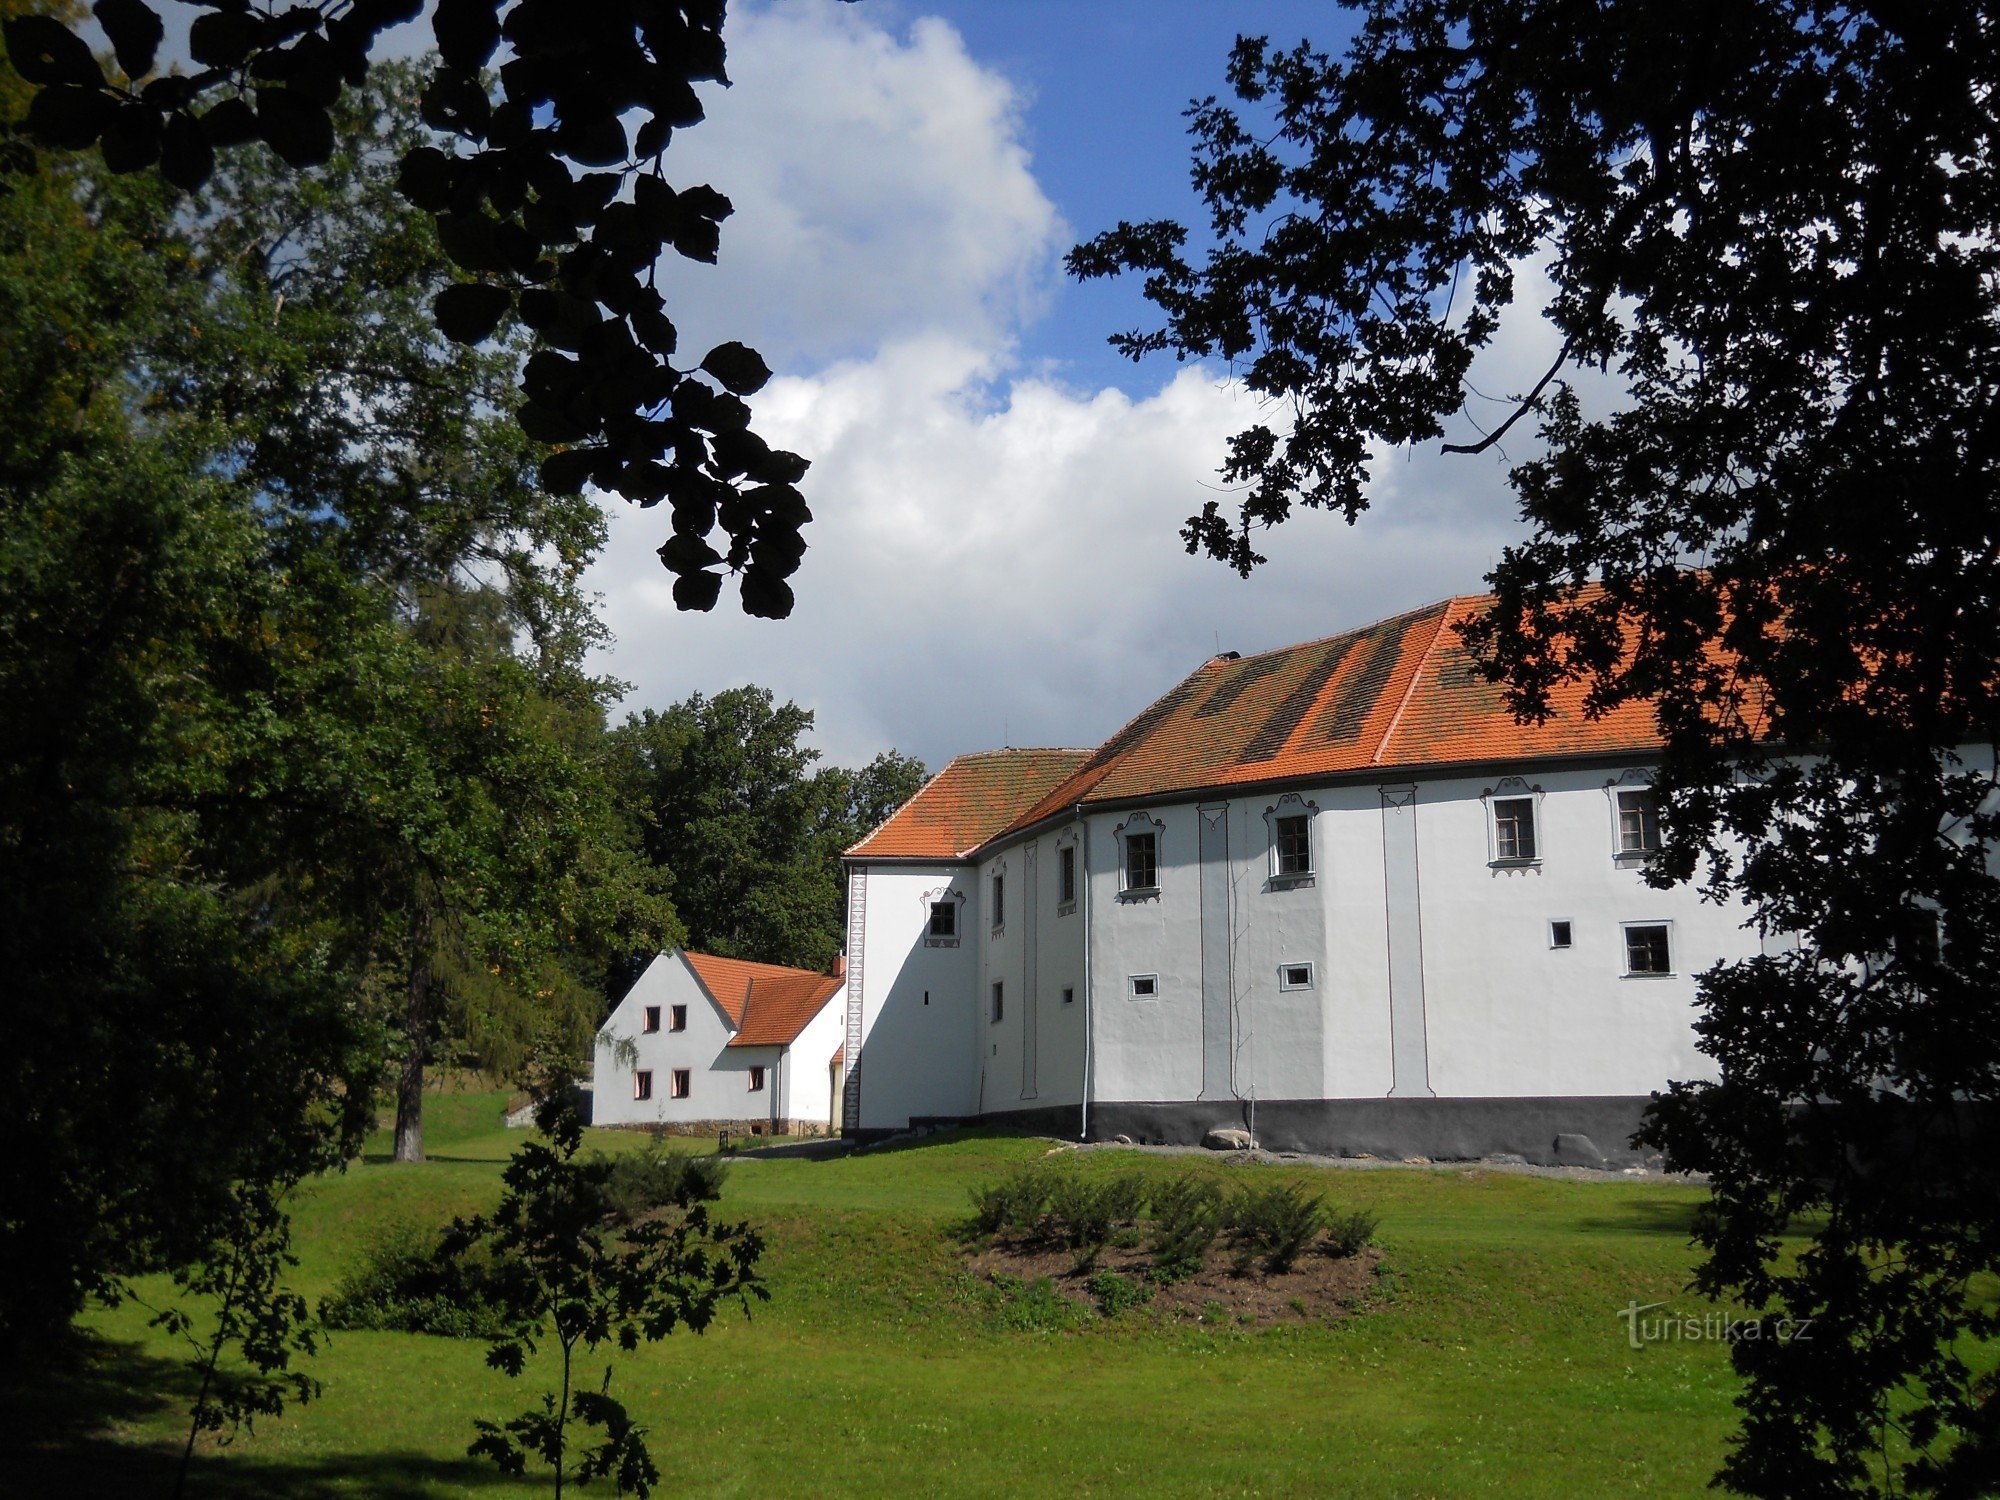 Dvorac Chanovice